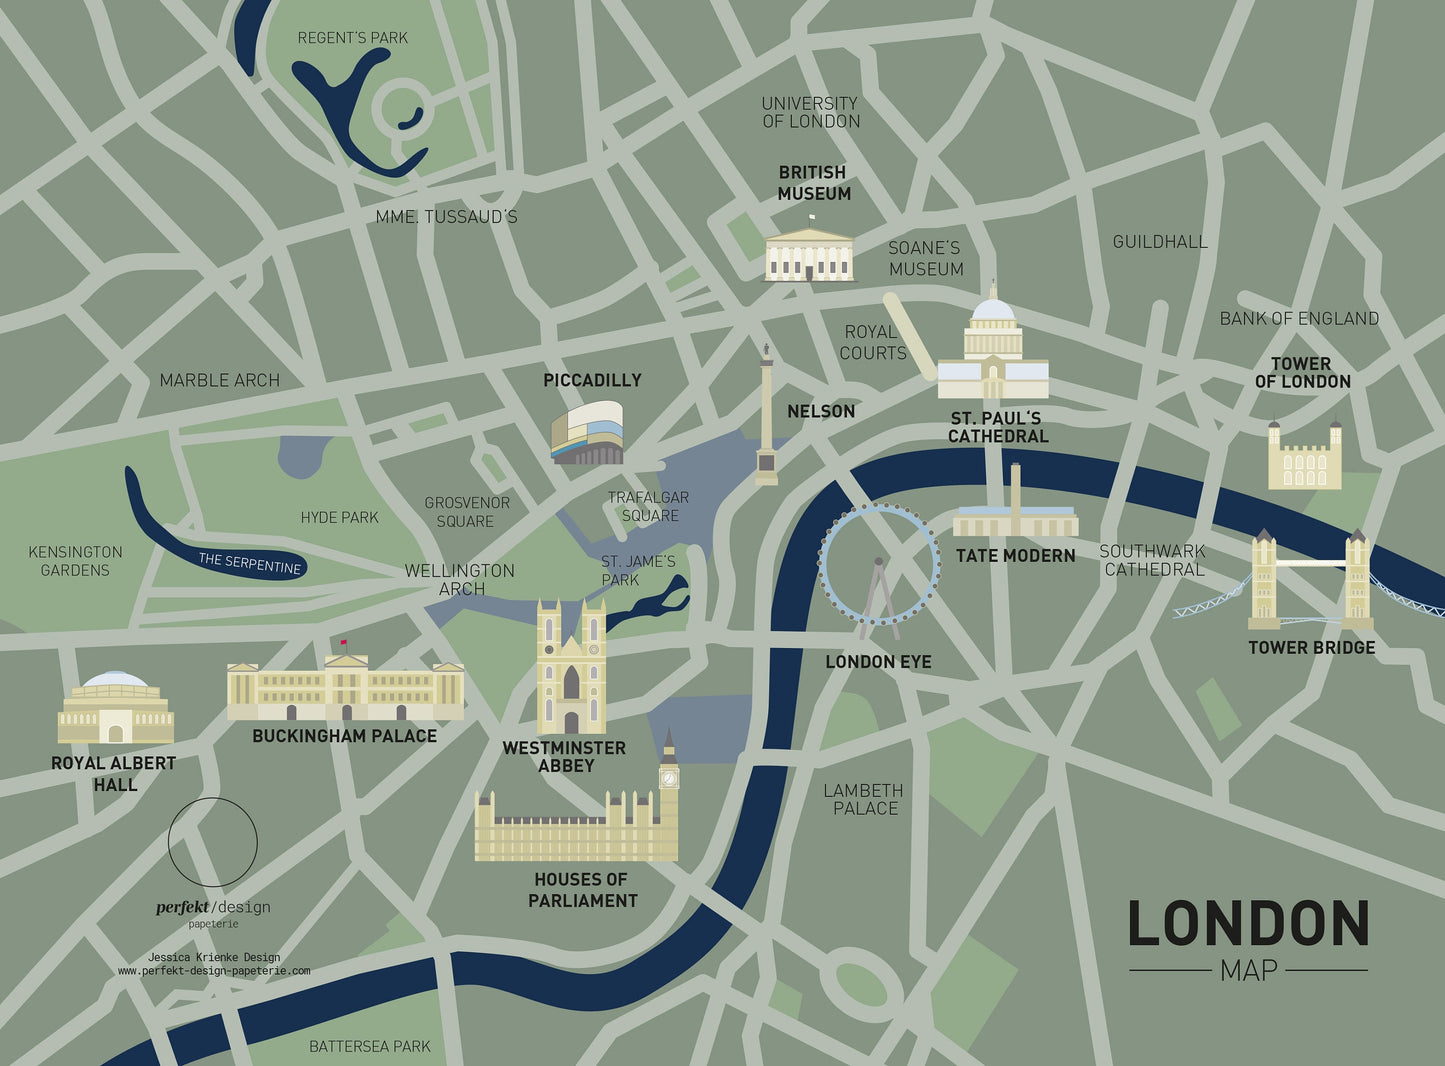 Notizbuch London | City Map | Sights | Line Art | Illustration | 13x20 cm